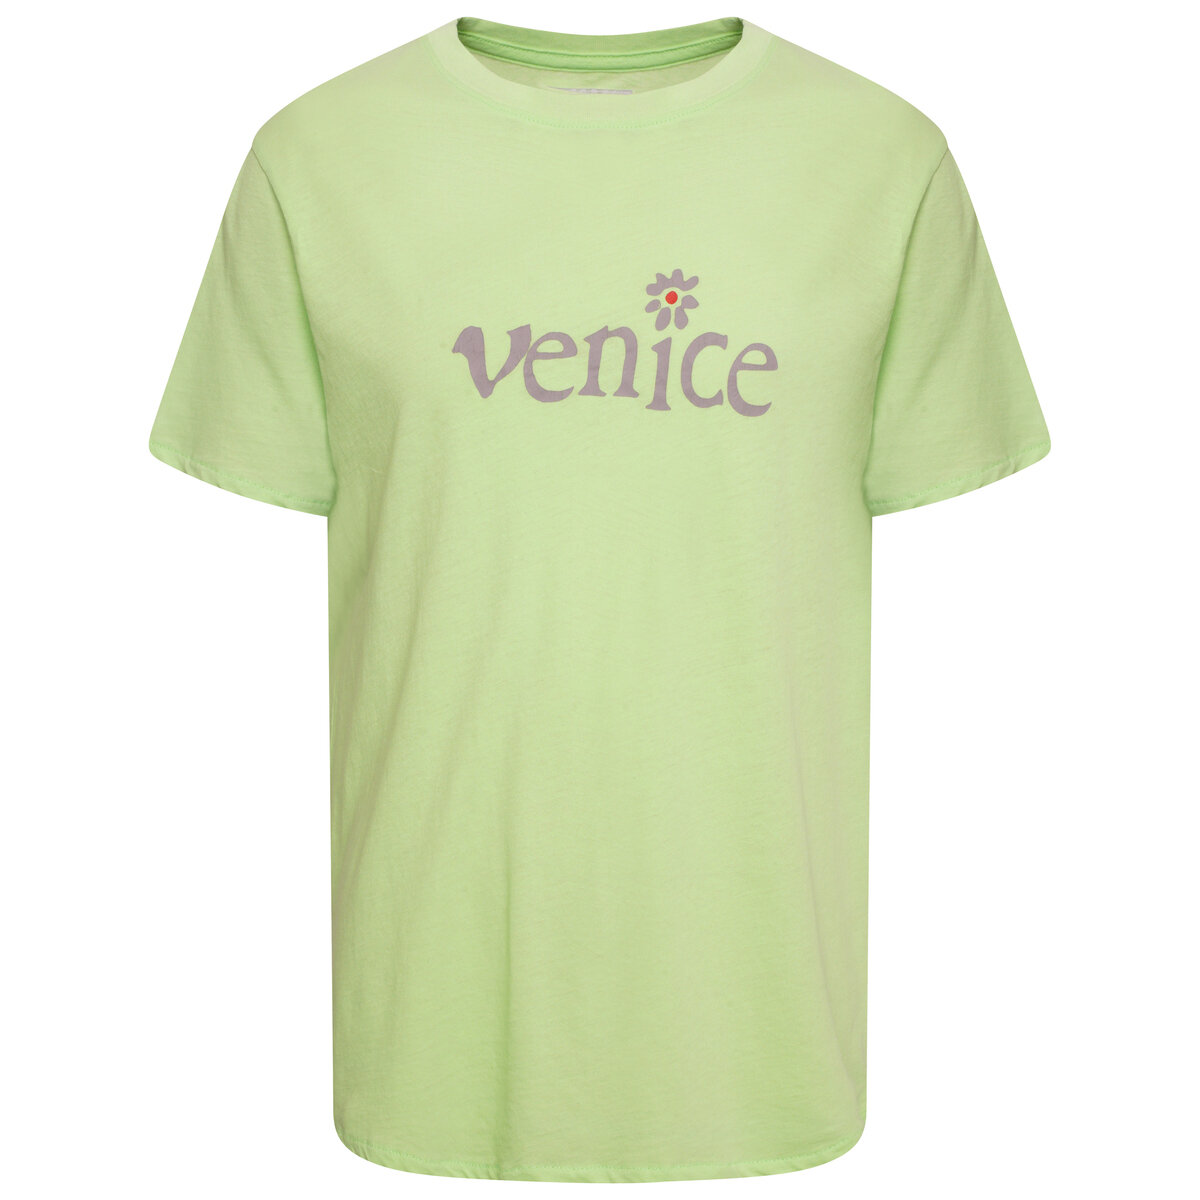 Venice - Be Nice T-shirt Xl Green